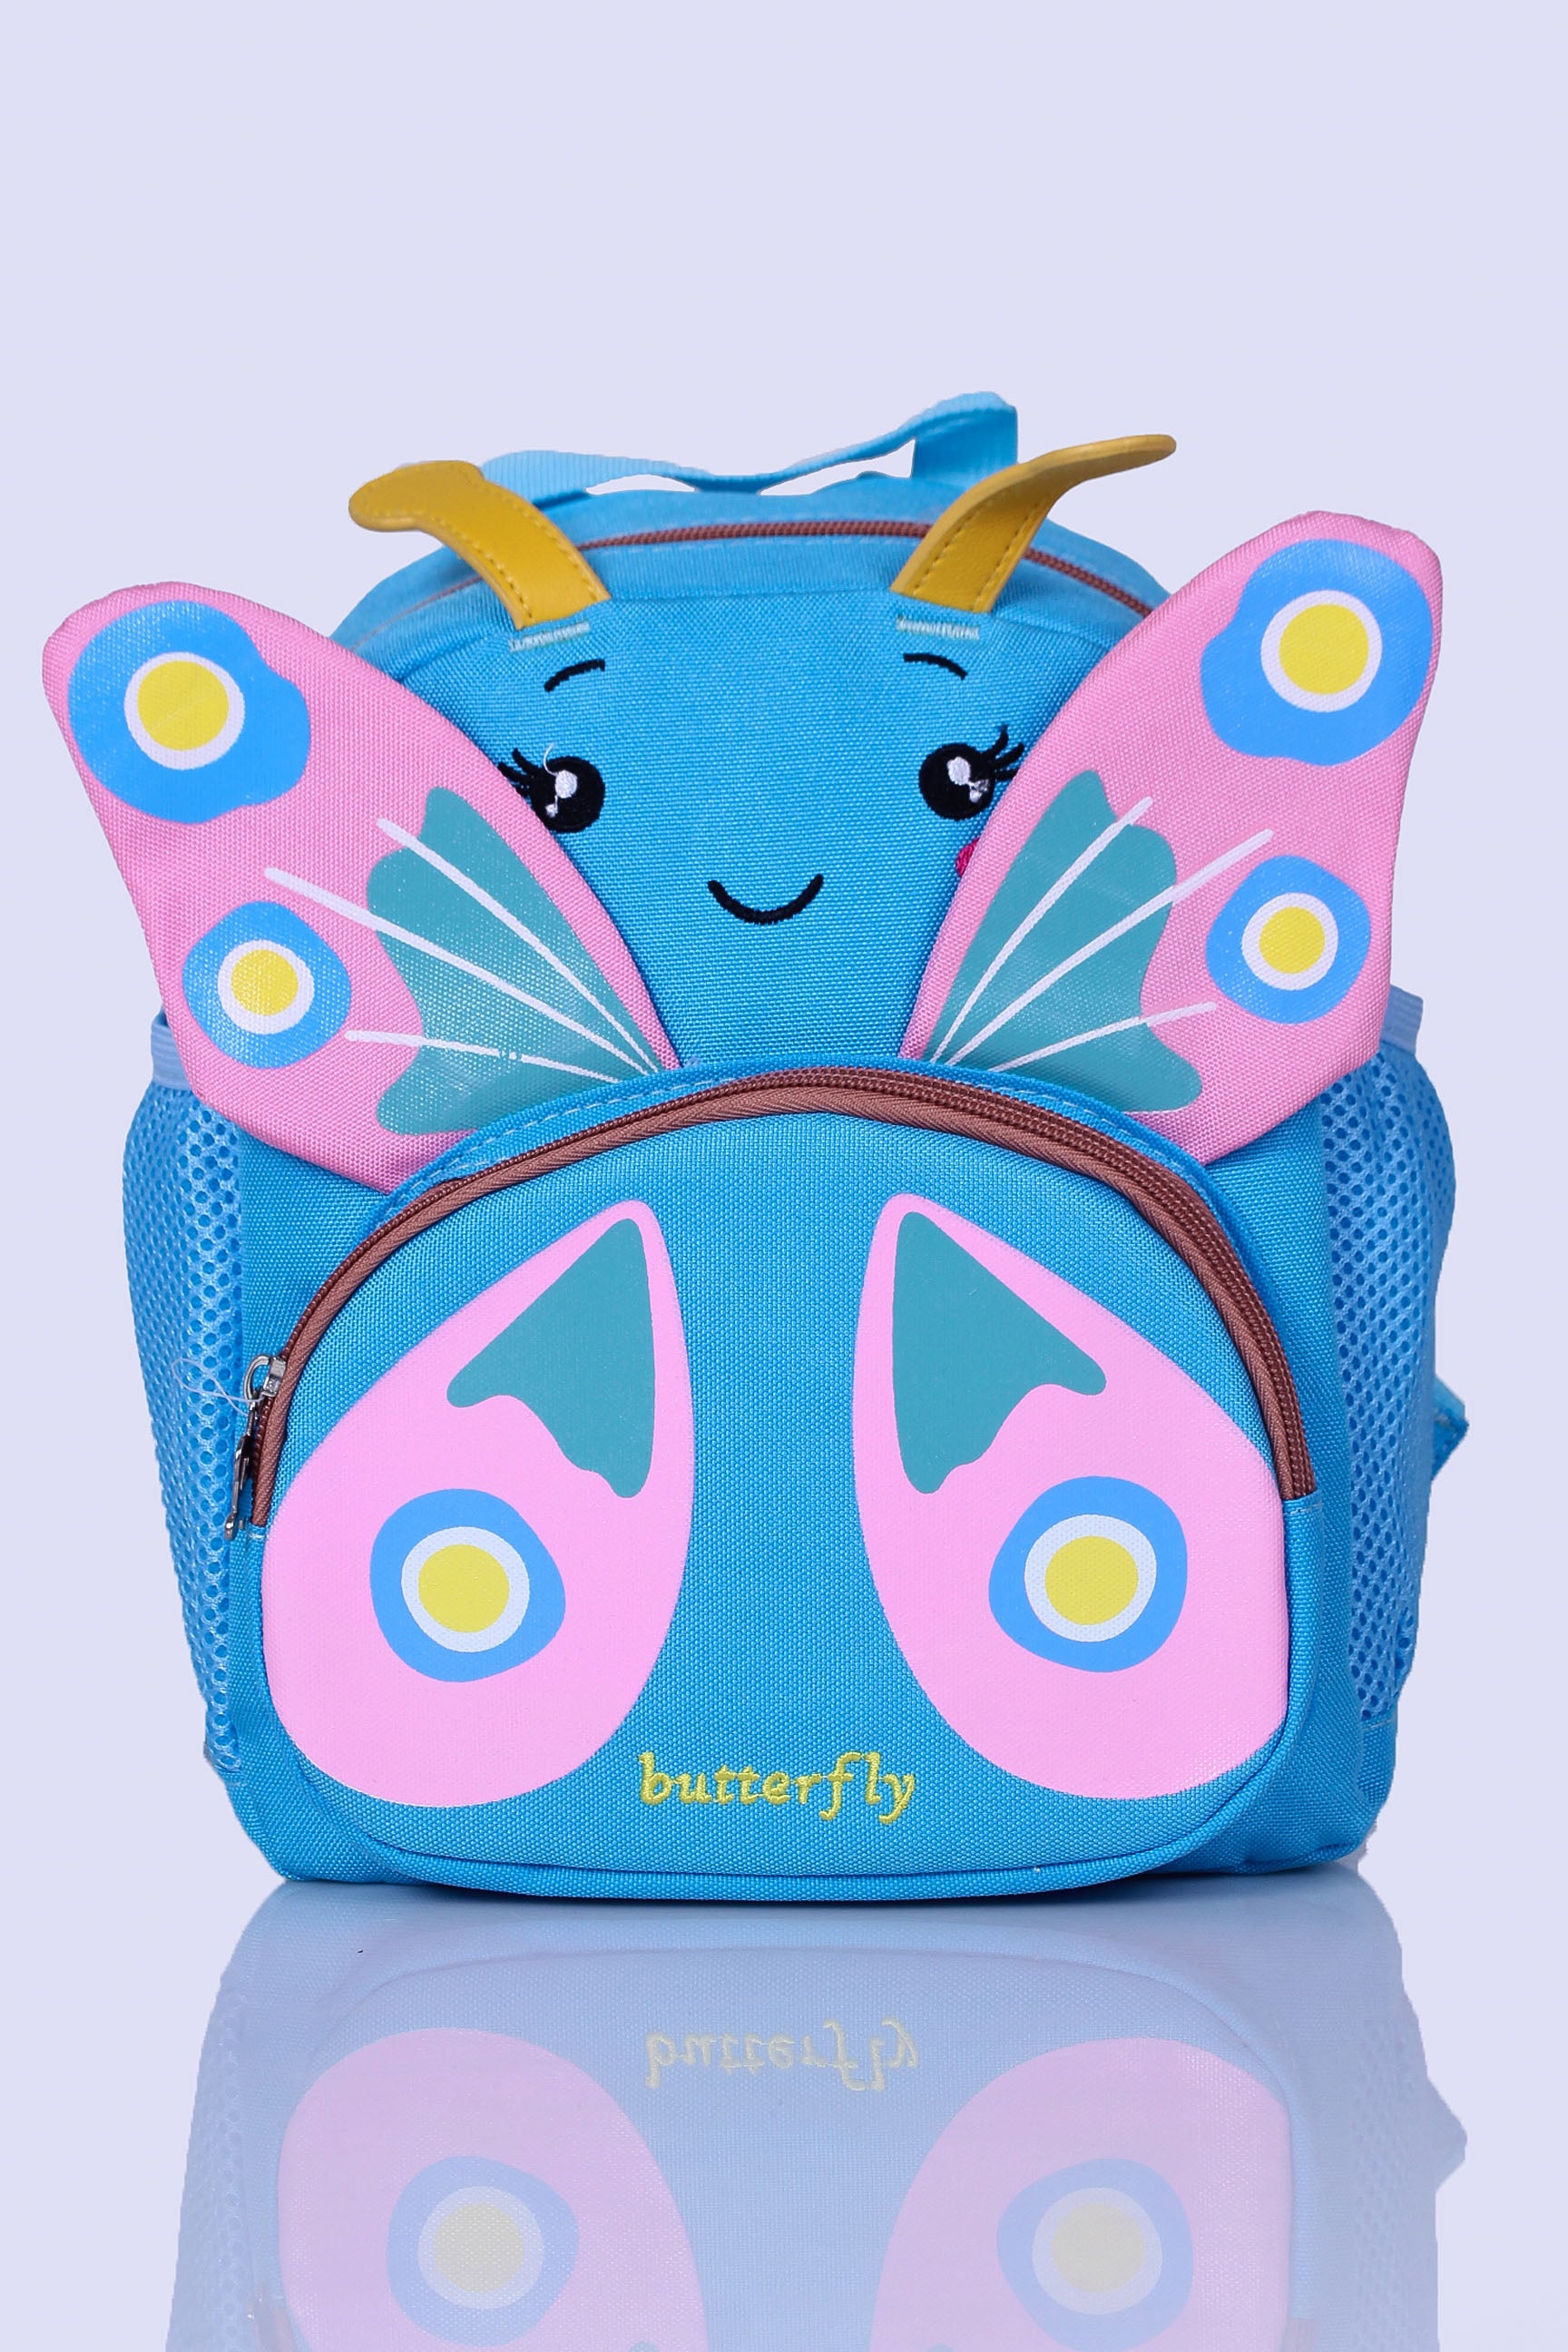 School Bags & Back Pack 2290-10 Blue